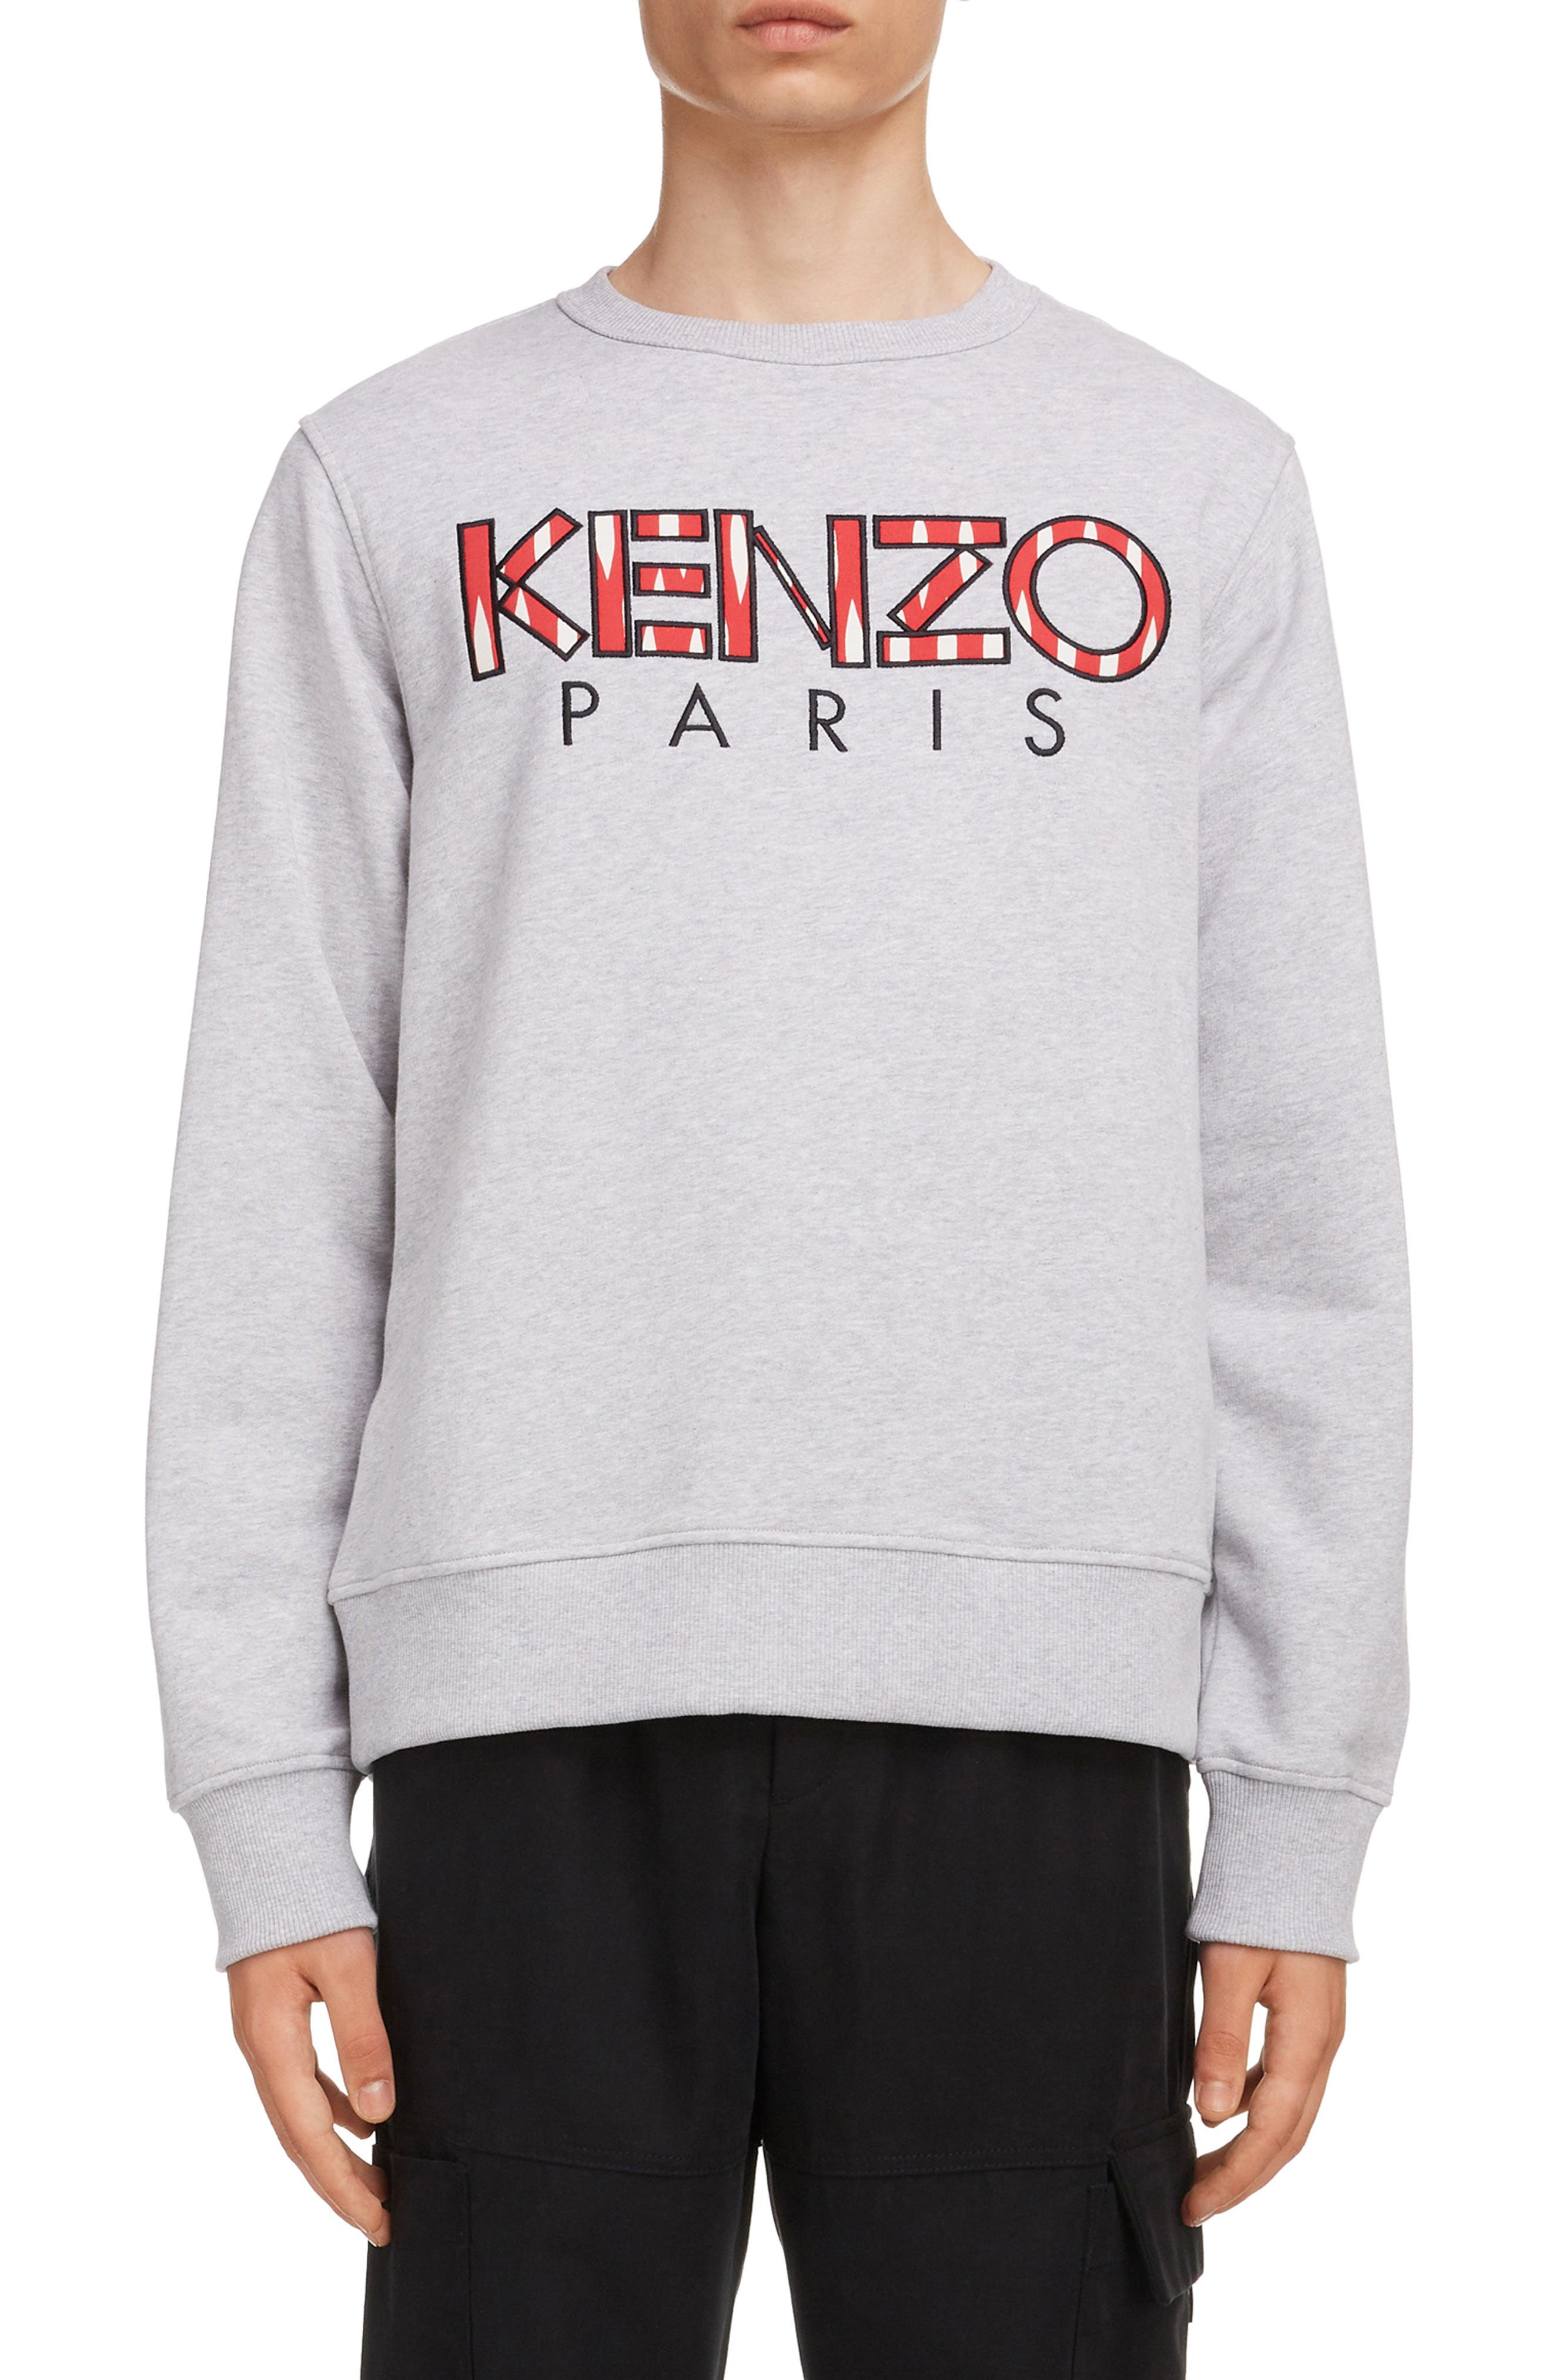 KENZO Paris Crewneck Sweatshirt | Nordstrom